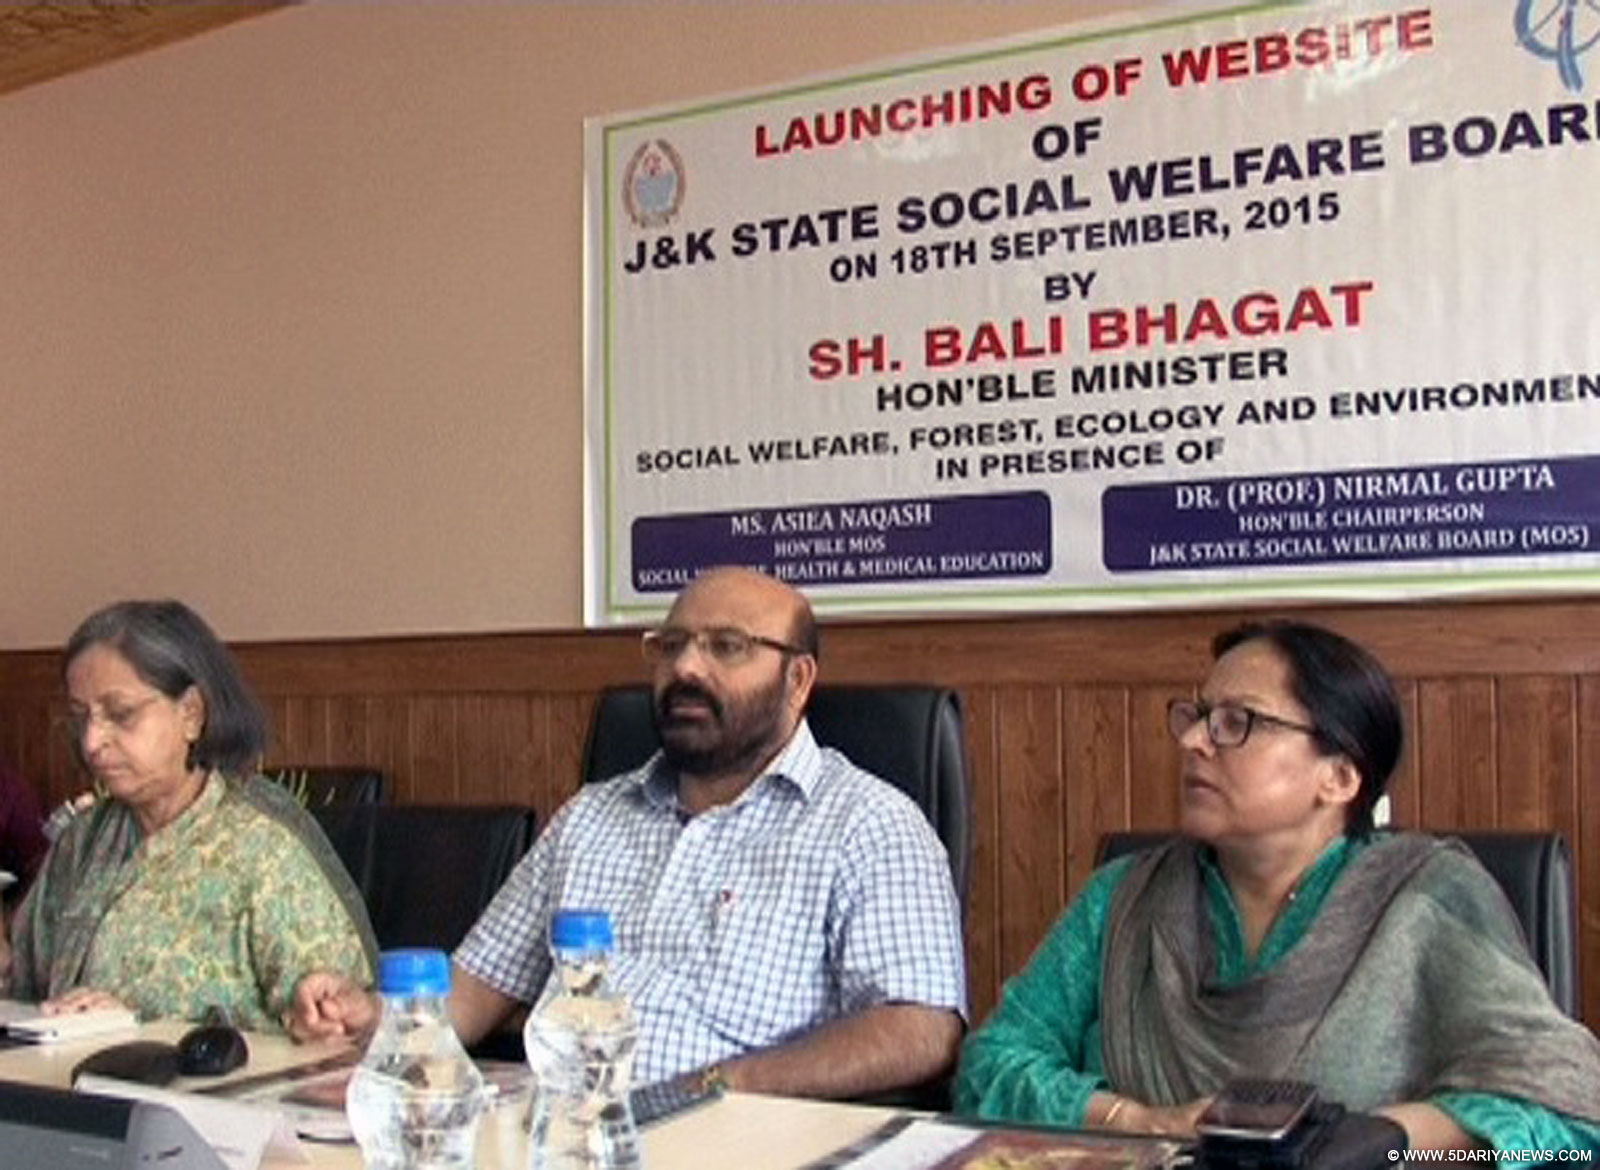 Bali Bhagat launches J&K SSWB website, facebook page